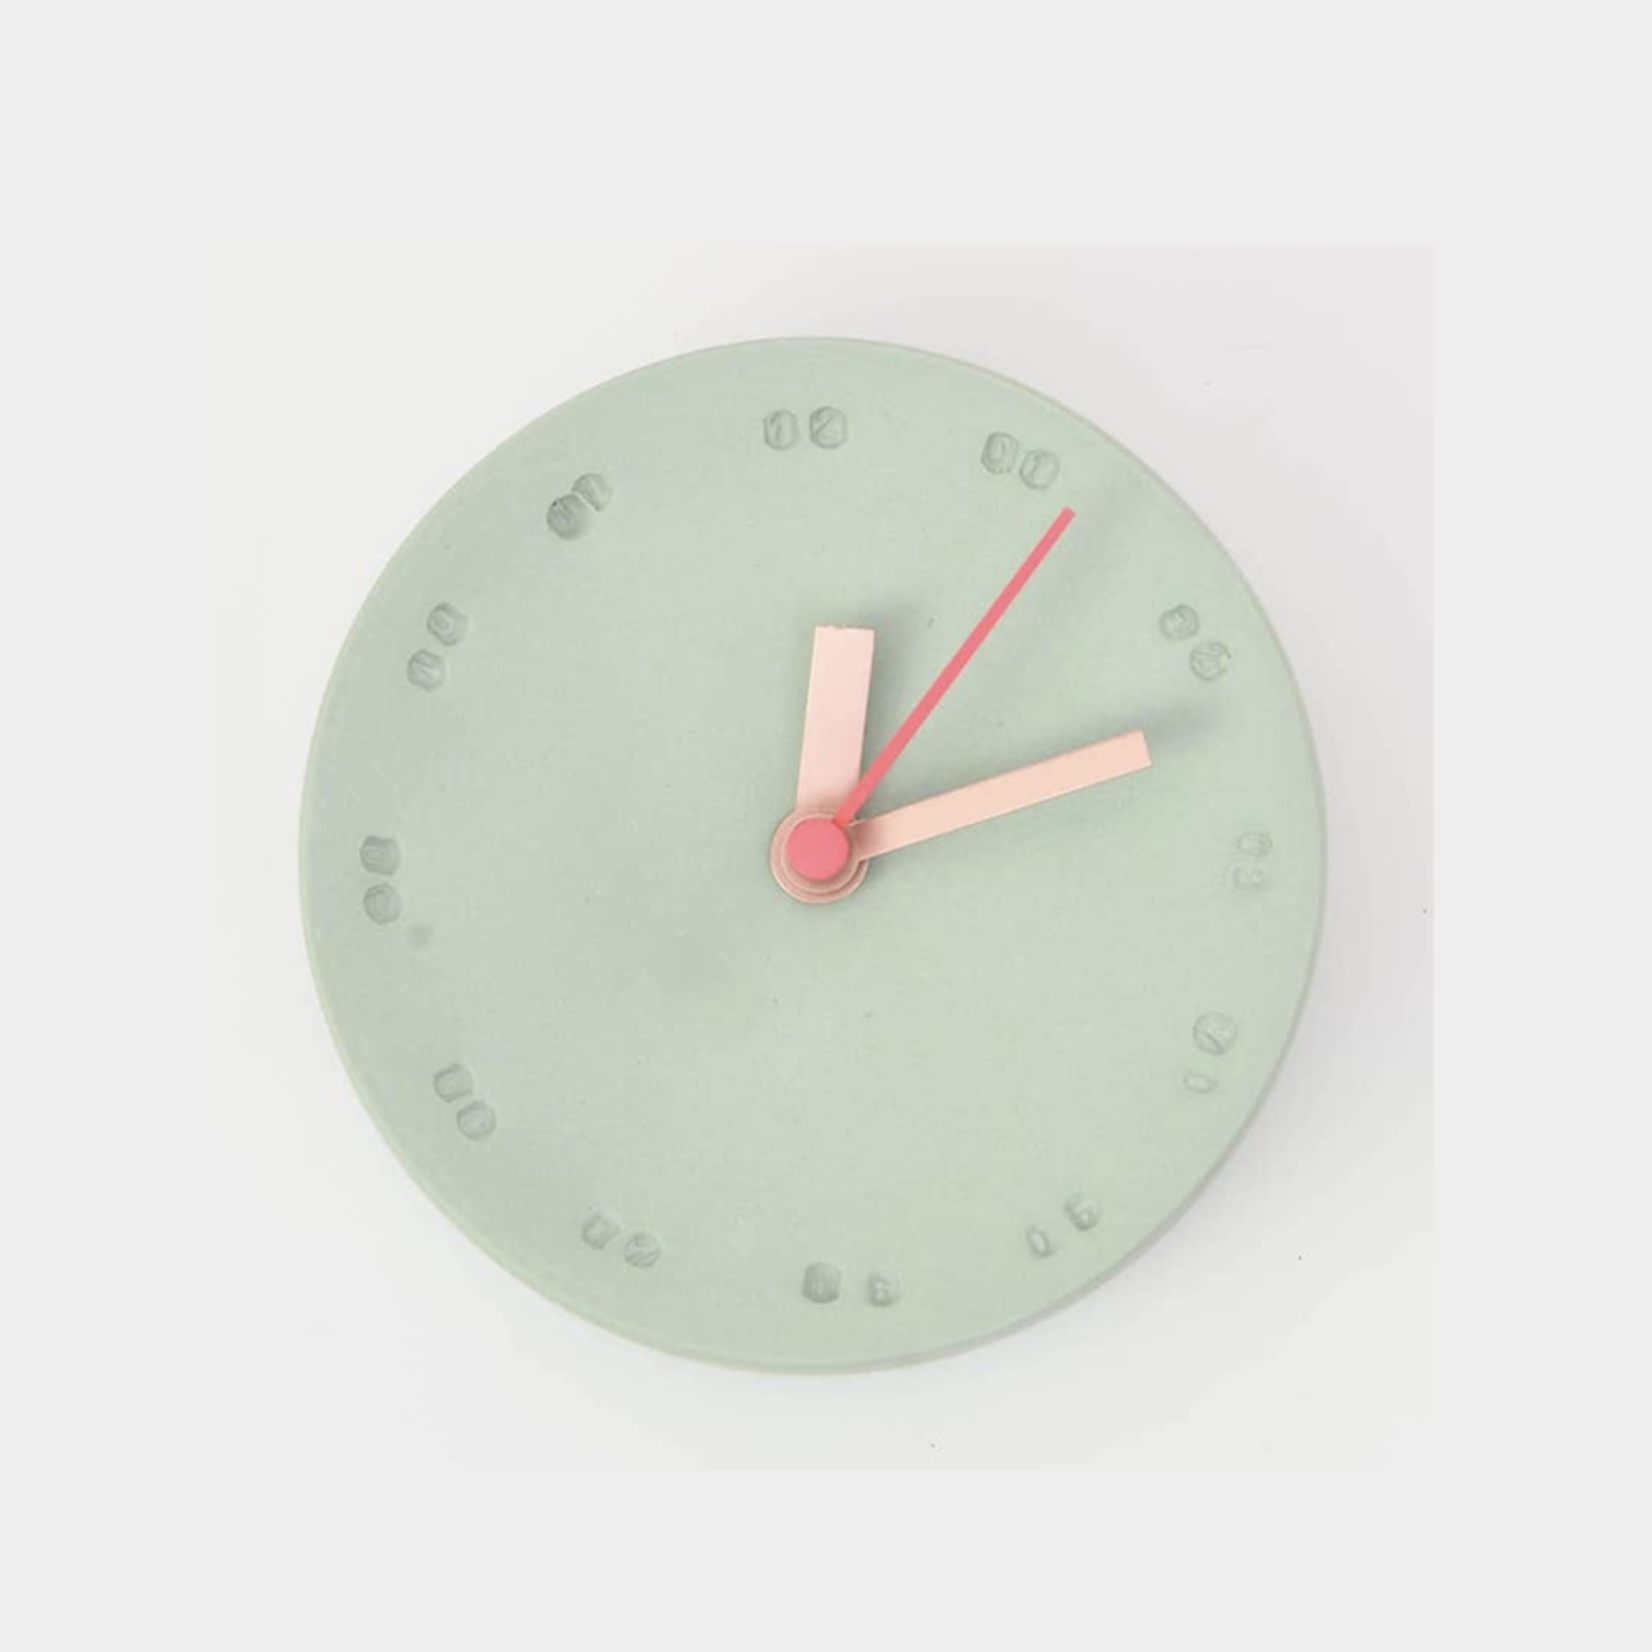 Harm&Elke clock small - green/ neon pink